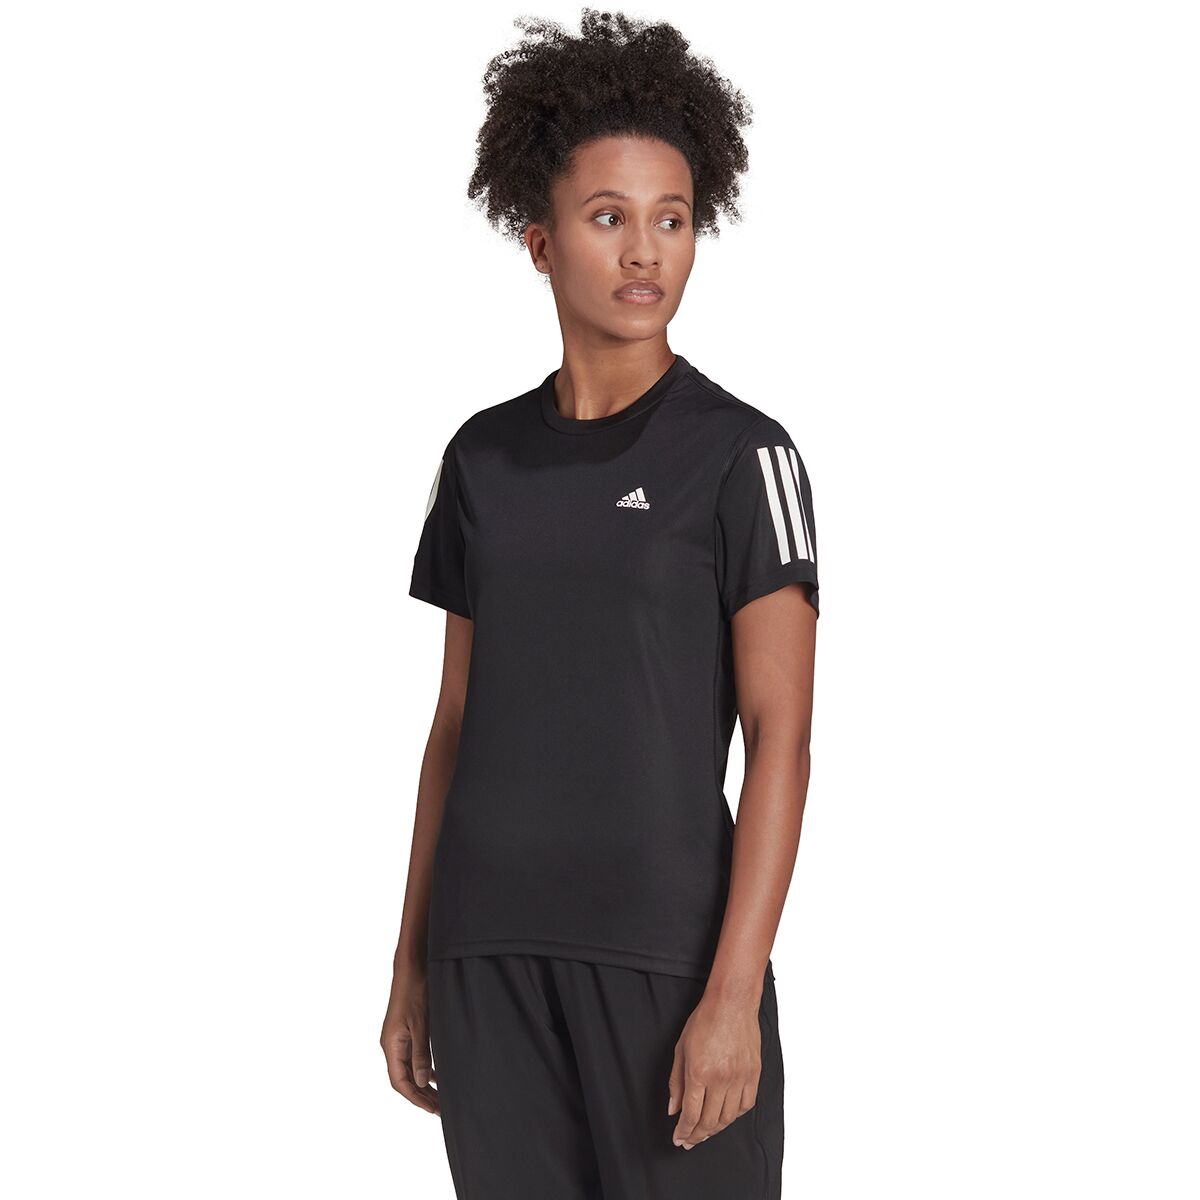 Adidas Own The Run T-Shirt - Women's